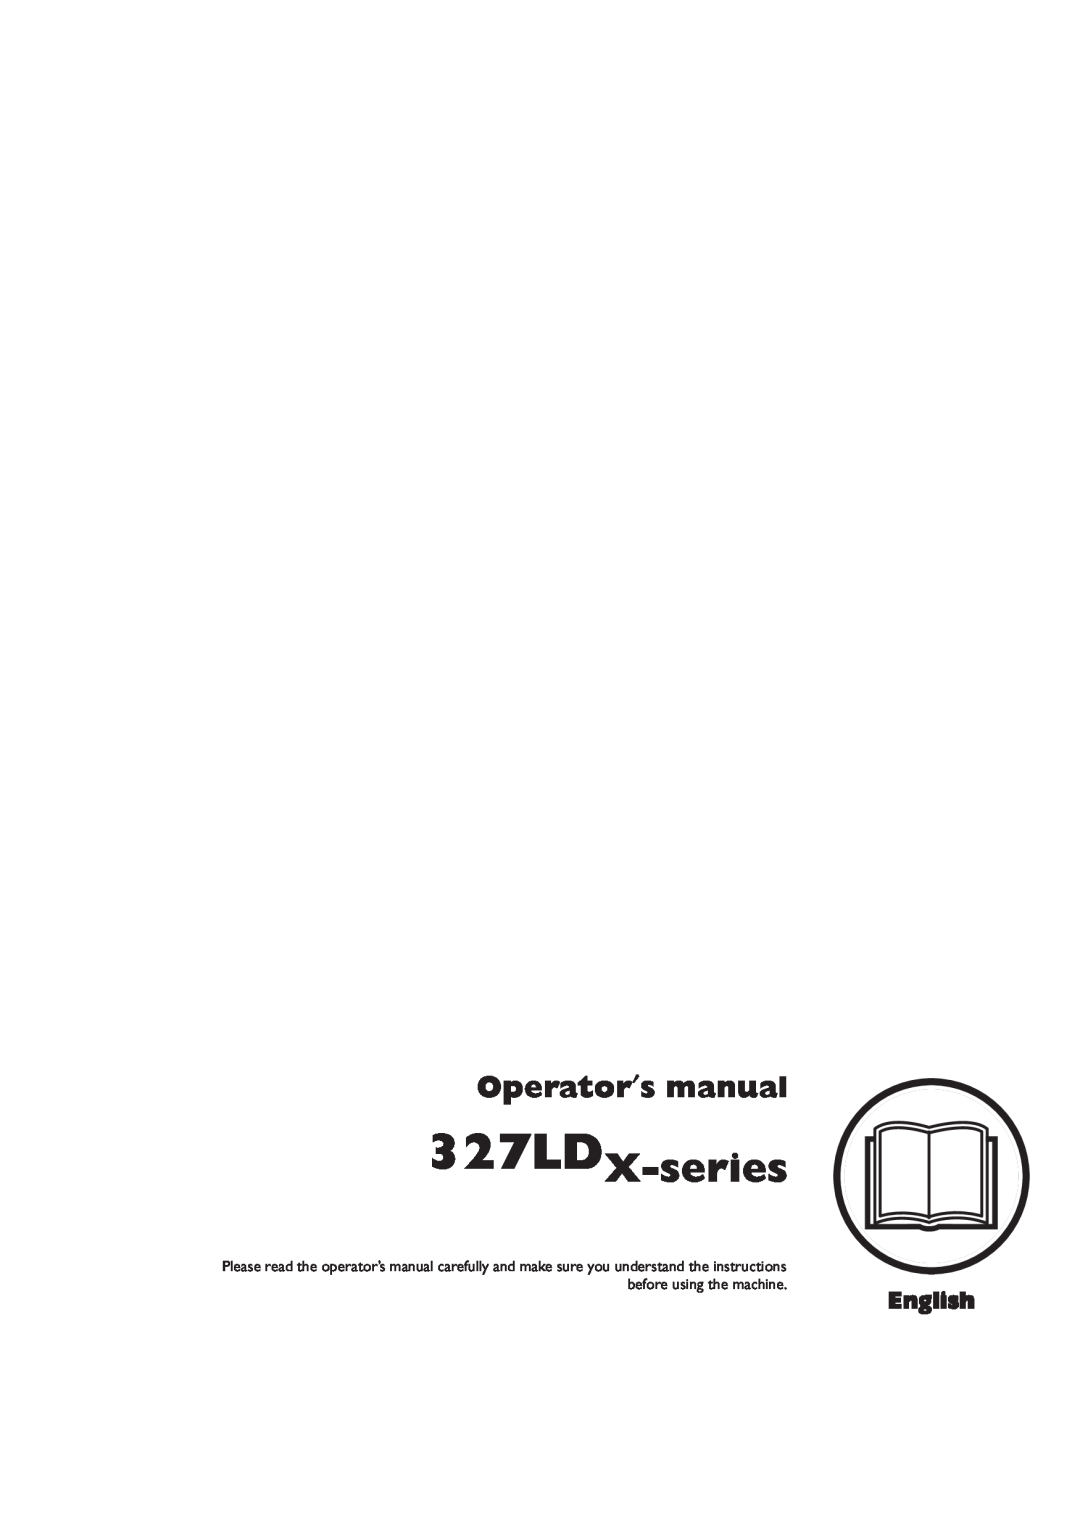 Husqvarna 327LDX-series manual English, Operator′s manual 